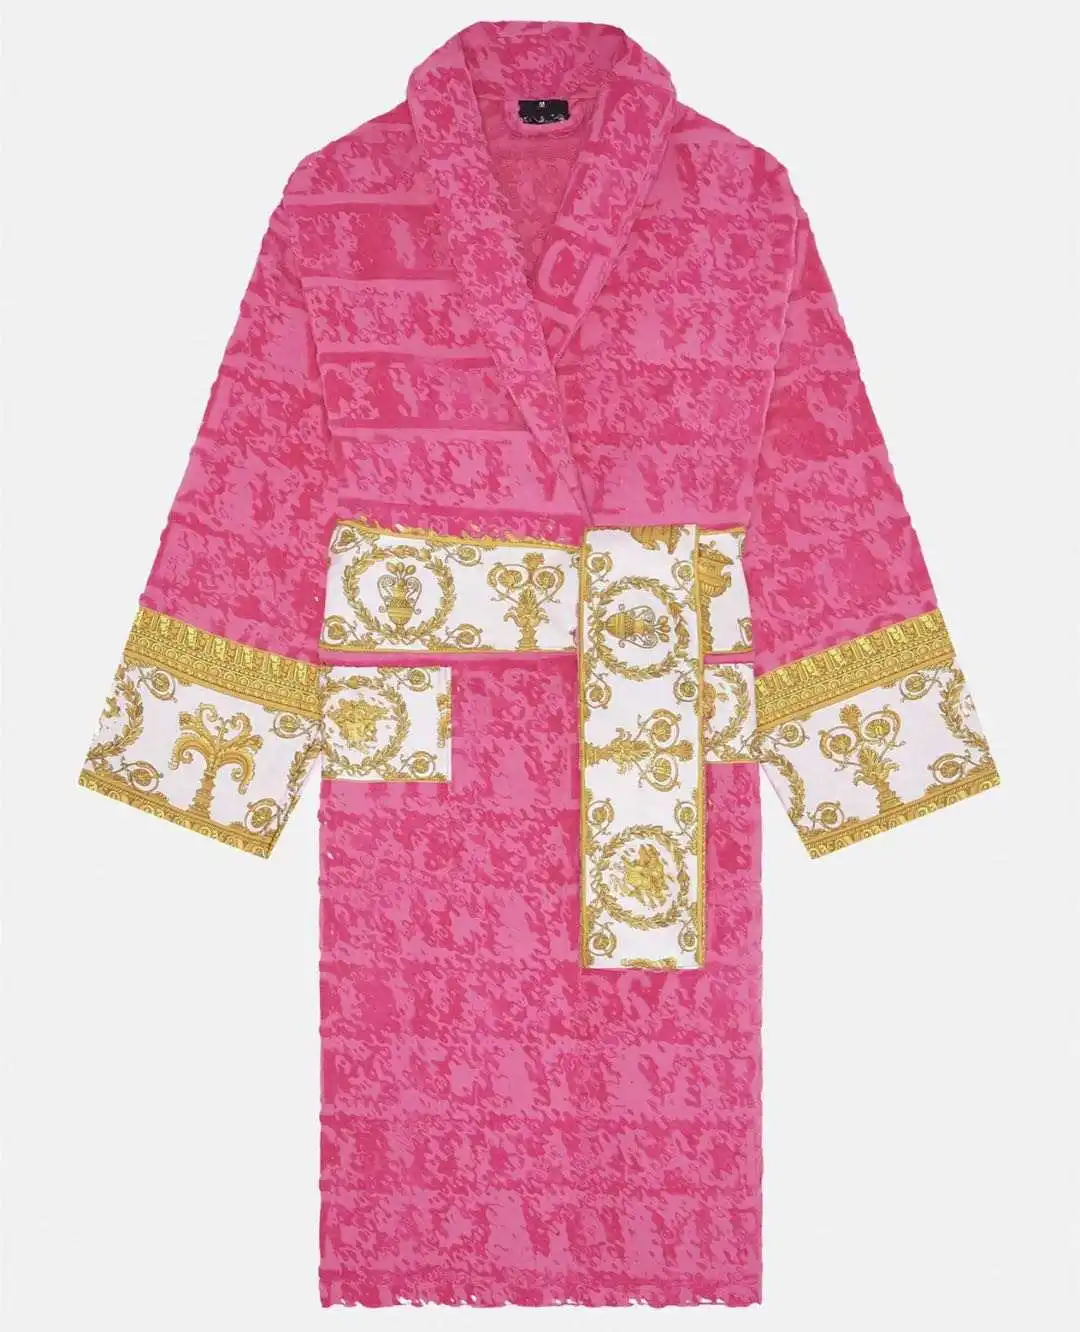 

2021 Autumn Winter clothing 100 % Cotton Bathrobe brand robe Luxury designer Sleepwear pajama Bath robe